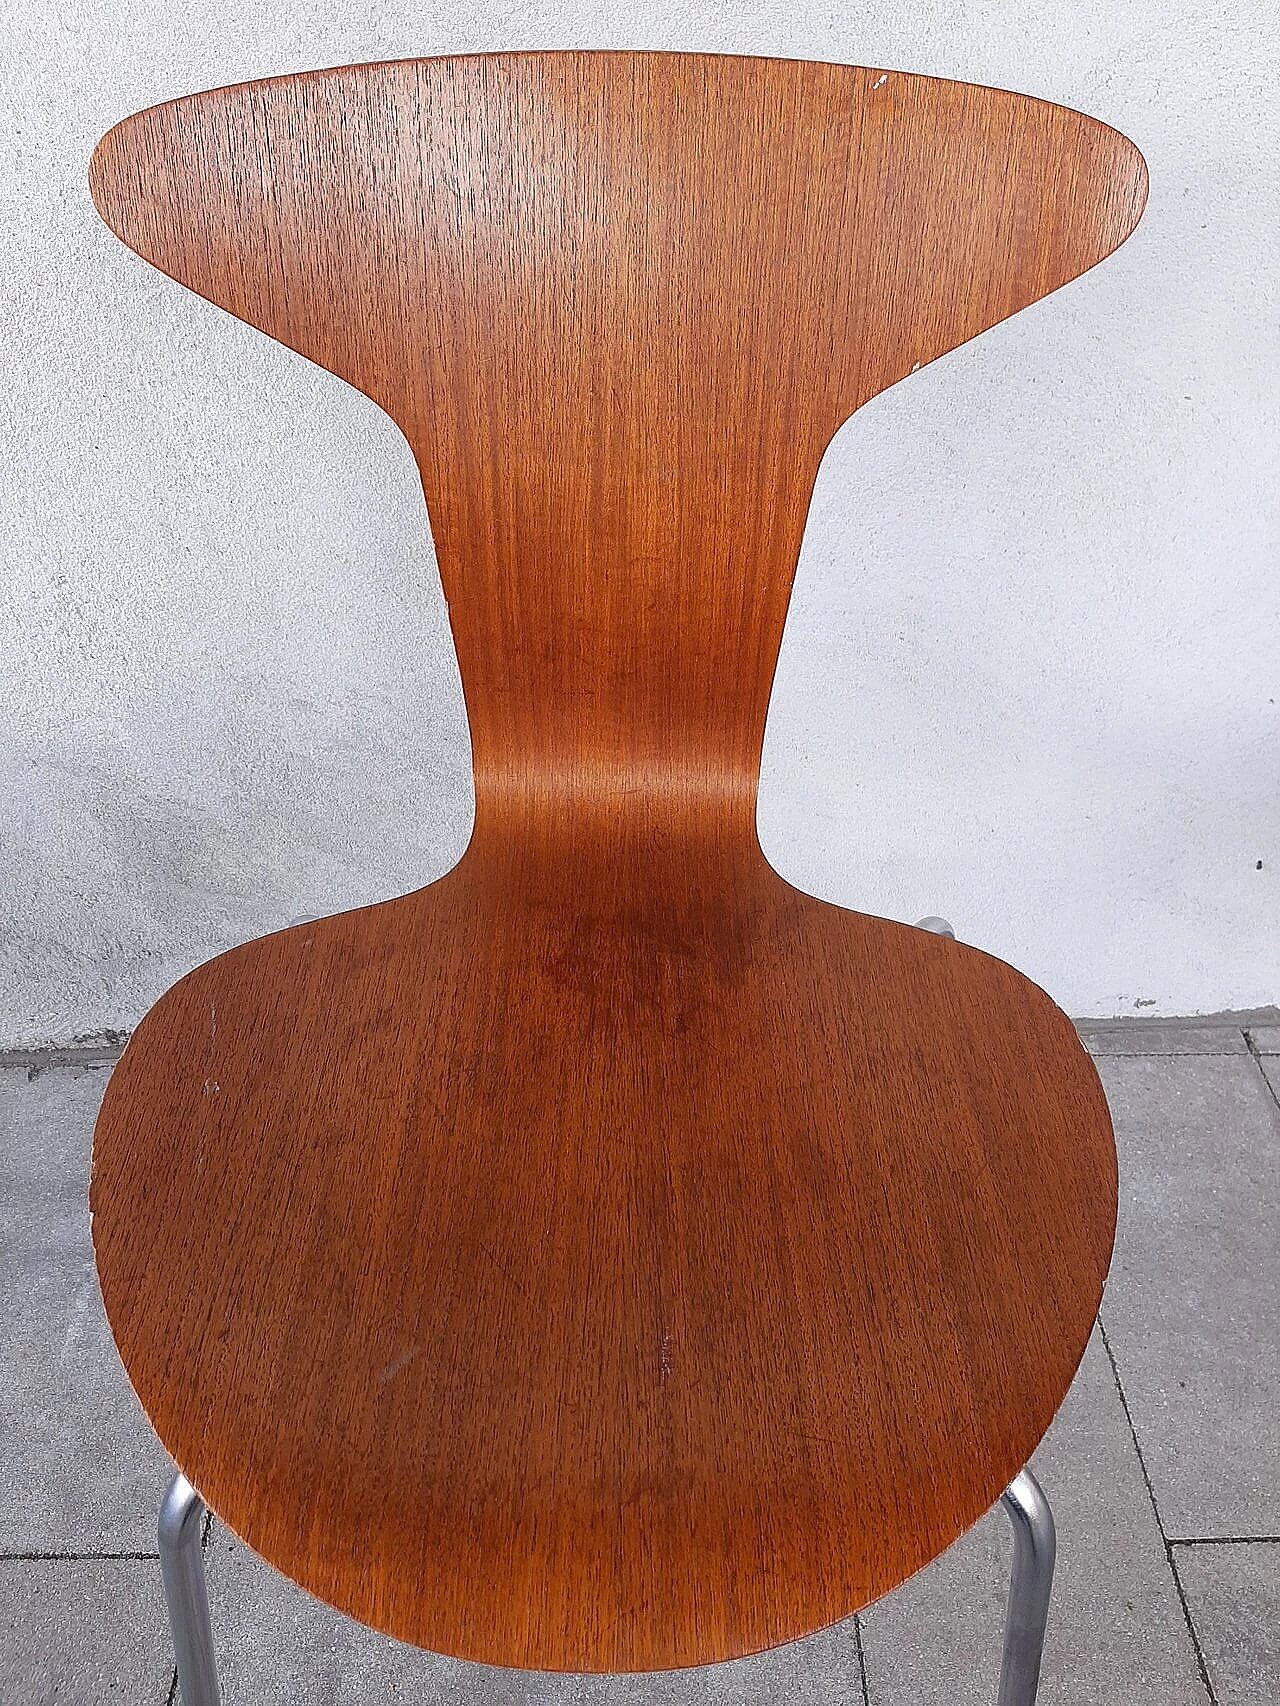 6 Chairs 3105 by Arne Jacobsen for Fritz Hansen, 1967 19